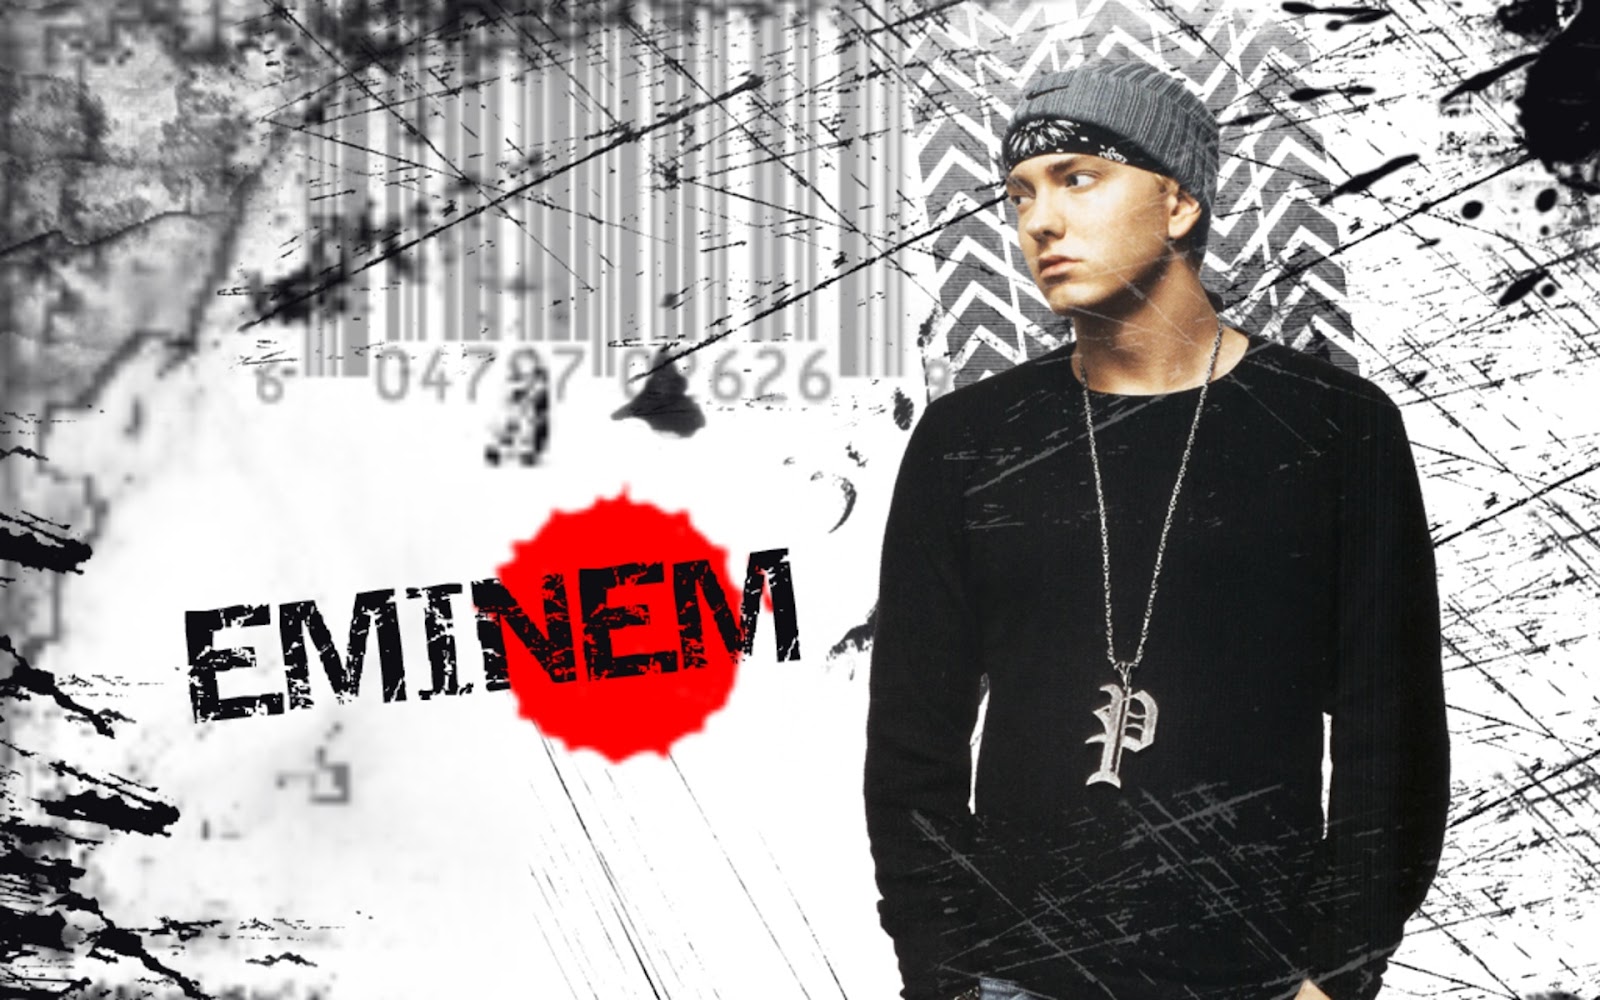 https://blogger.googleusercontent.com/img/b/R29vZ2xl/AVvXsEiIko2jmD76UPEham6ScQdbhIBHa87ZaCNU3ndn0ArIL3md6NHJYYjirmxDLi3GO9lDz4gouPfNMbJHK2epjzbtDl2YvgINe9NIsxiU6iS7i5luQQ4KkjzB9gL2VKBl-rxjJqZmKbZ8sDk/s1600/Eminem+HD+Wallpaper+2012-2013+04.jpg